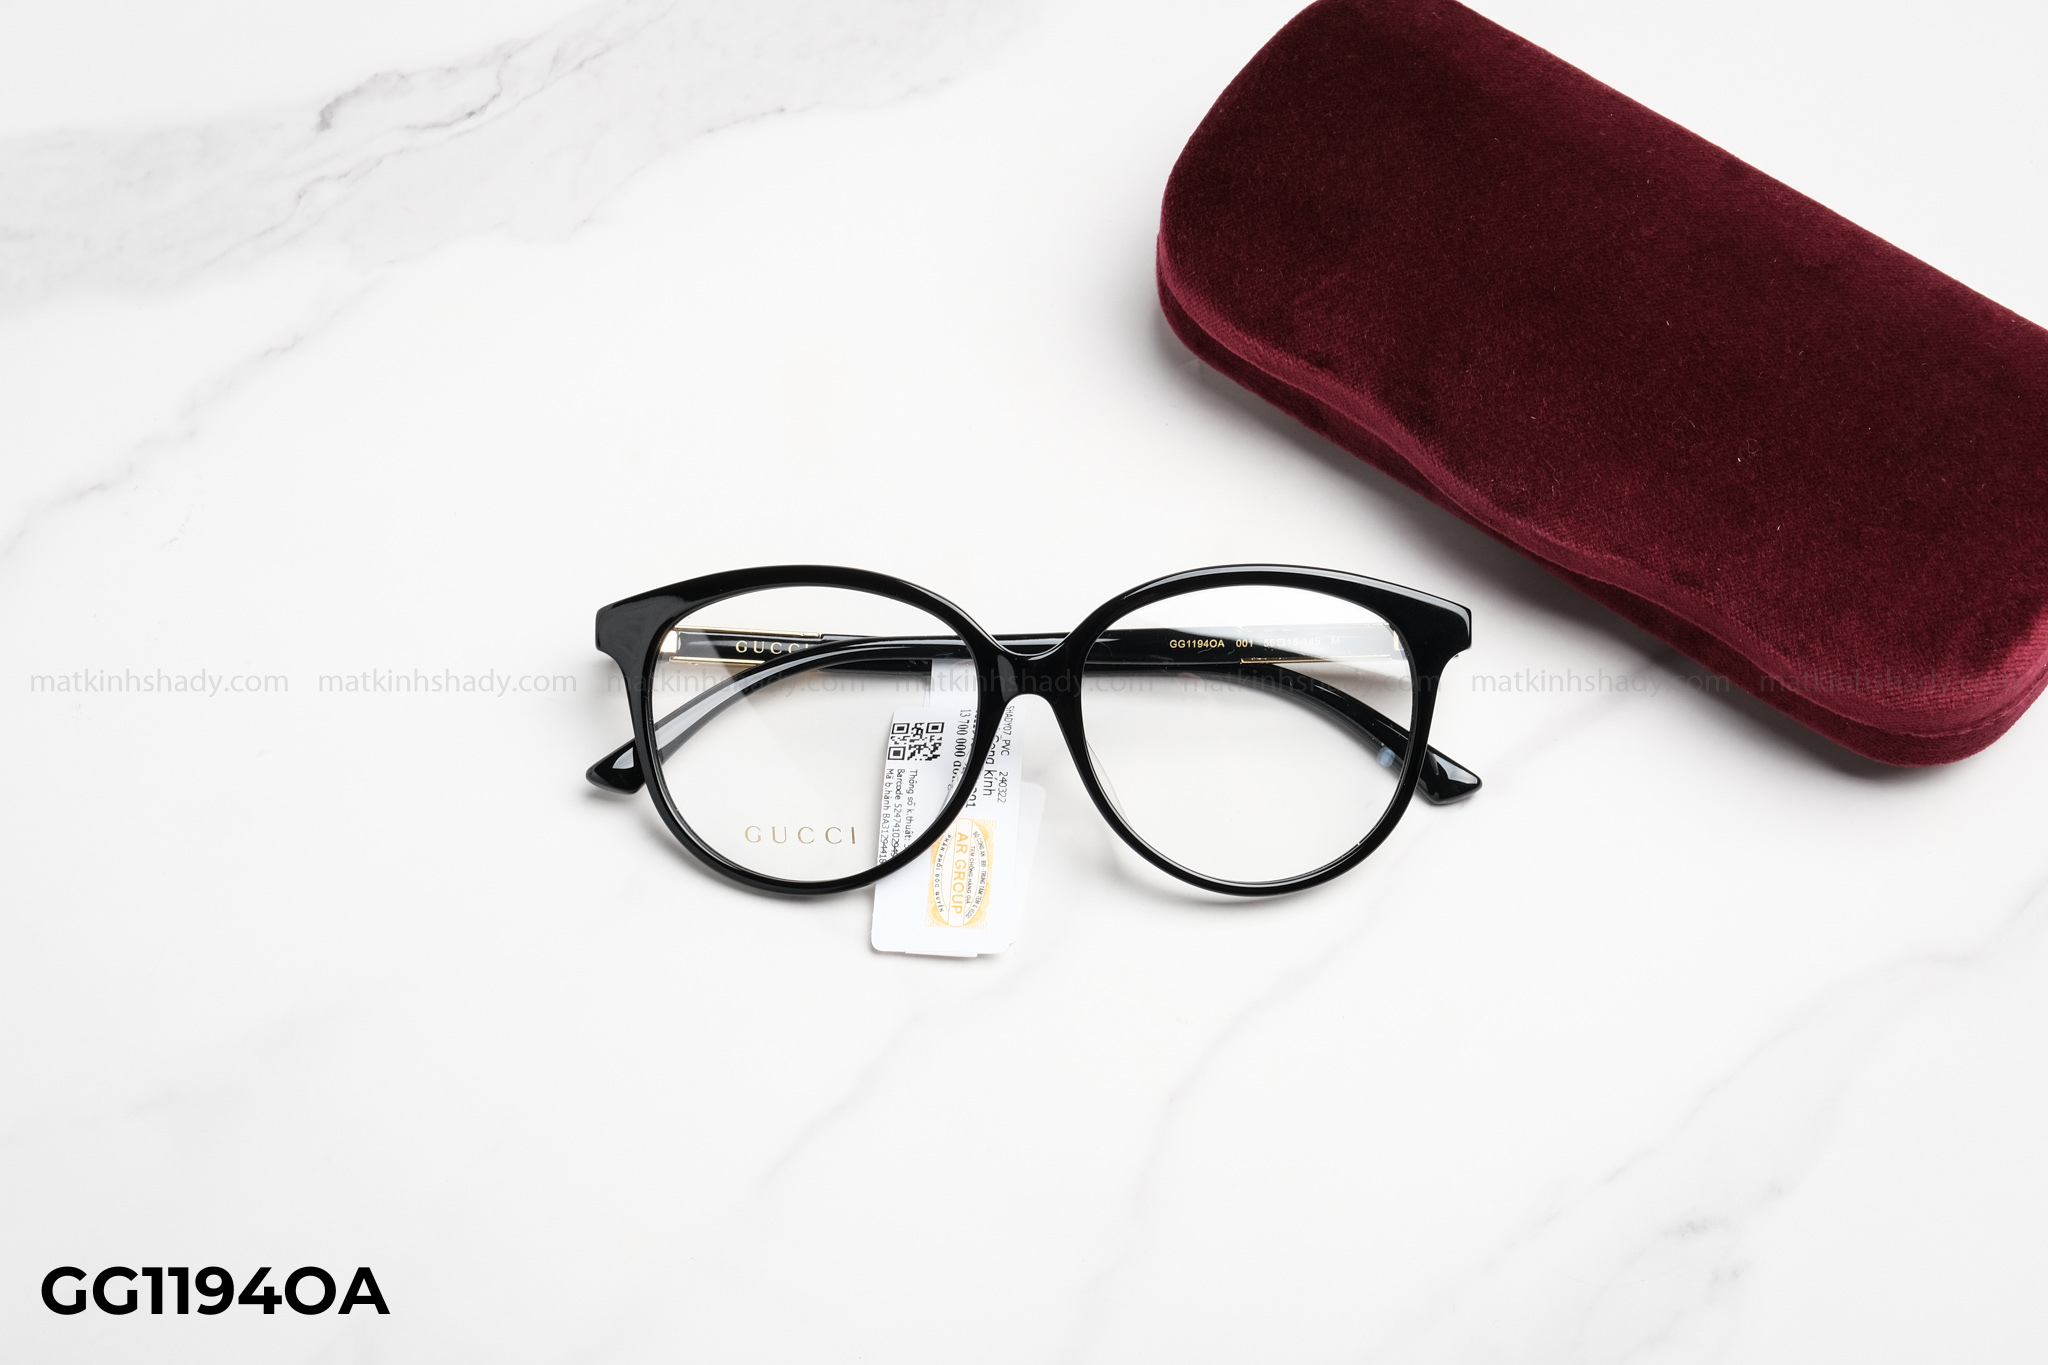  Gucci Eyewear - Glasses - GG1194OA 